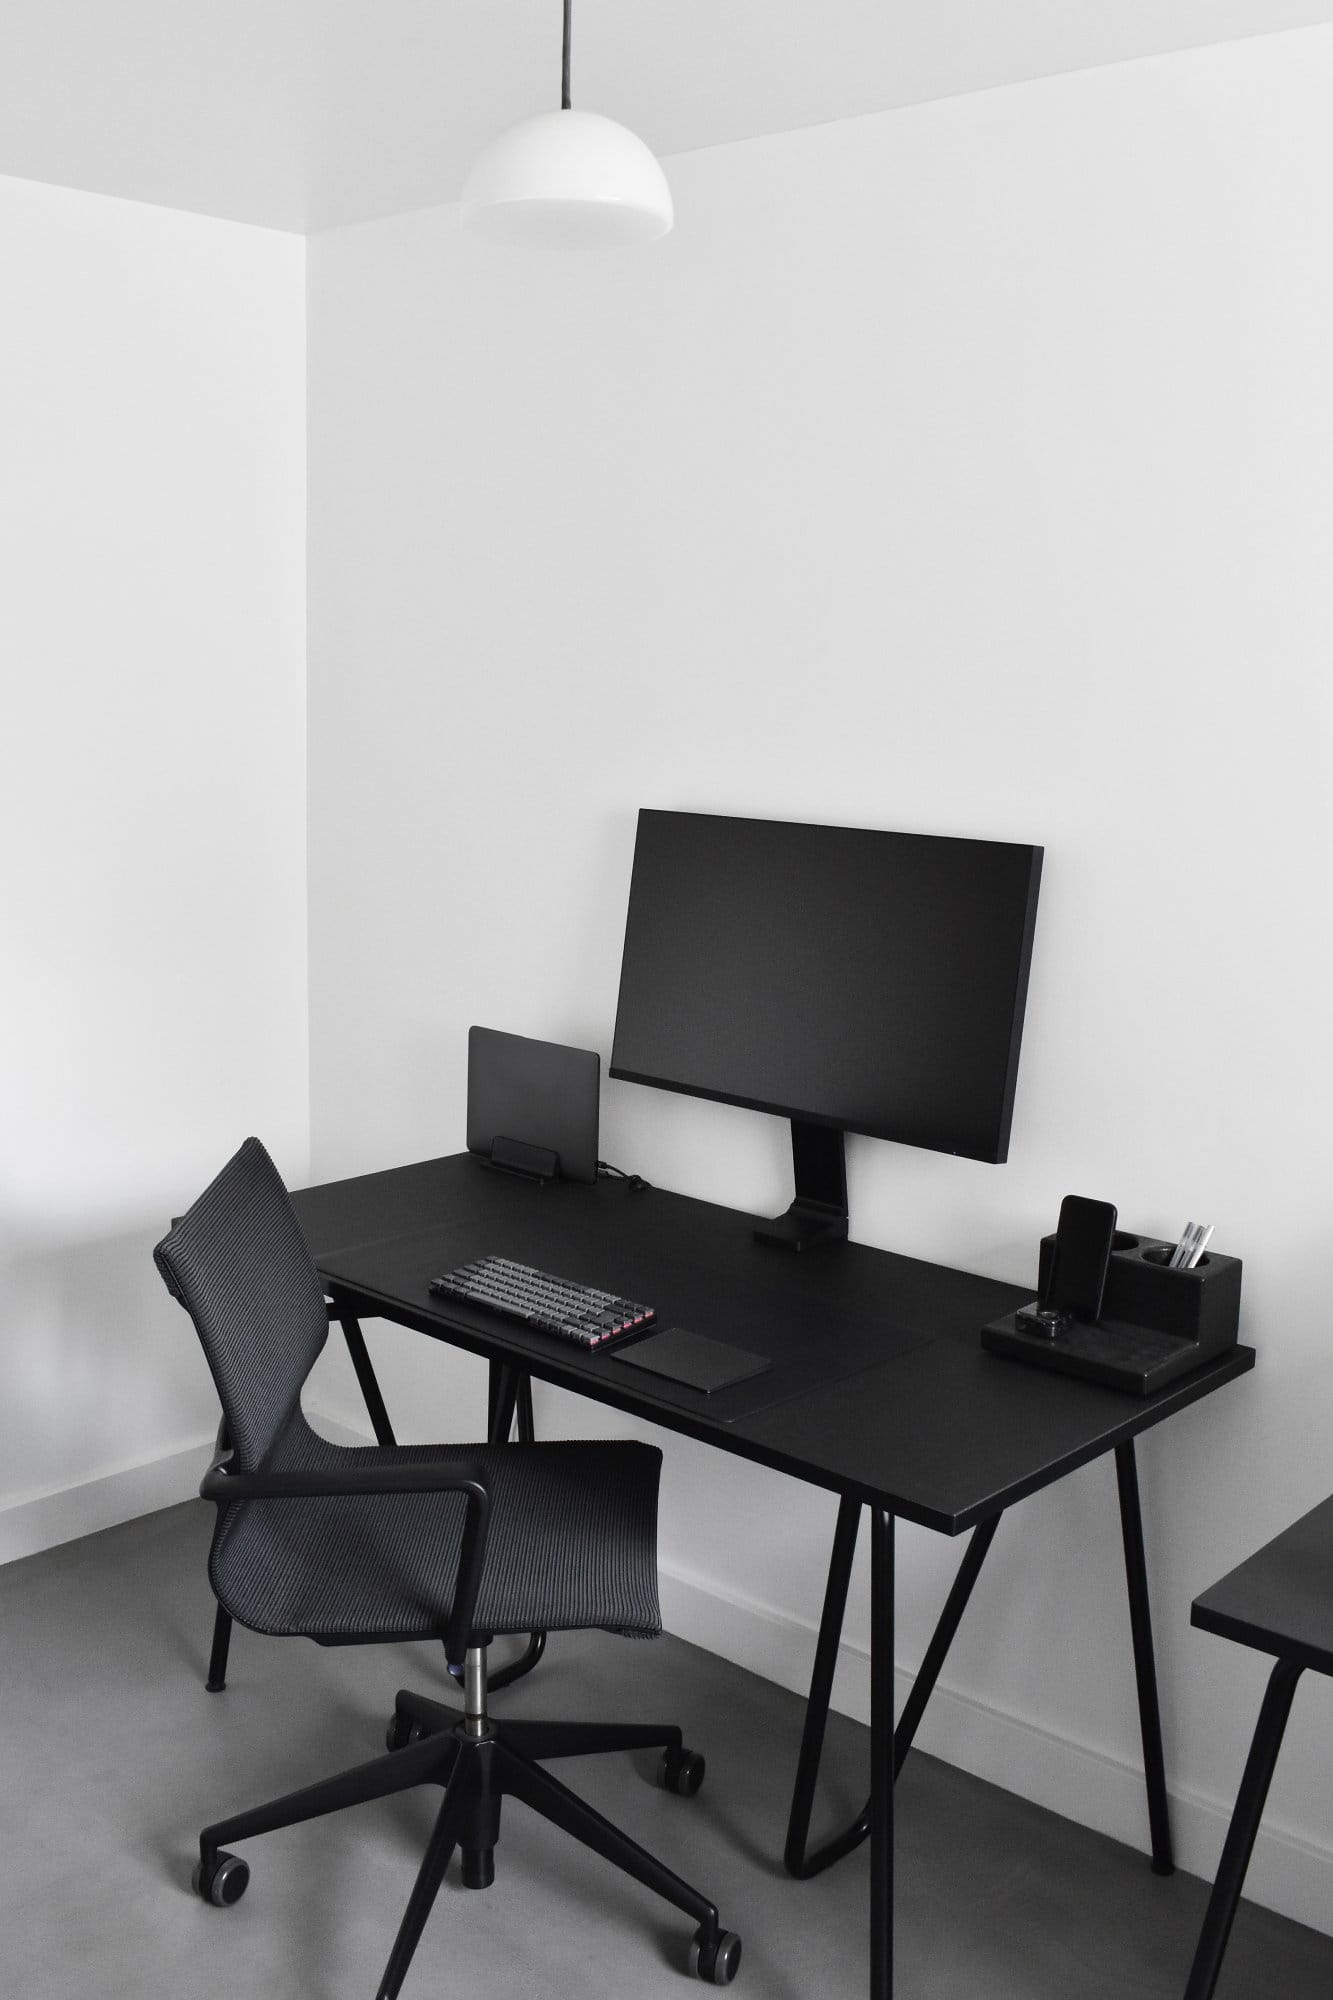 21 Multi-monitor Computer Desk Setup Ideas for Tech Lovers